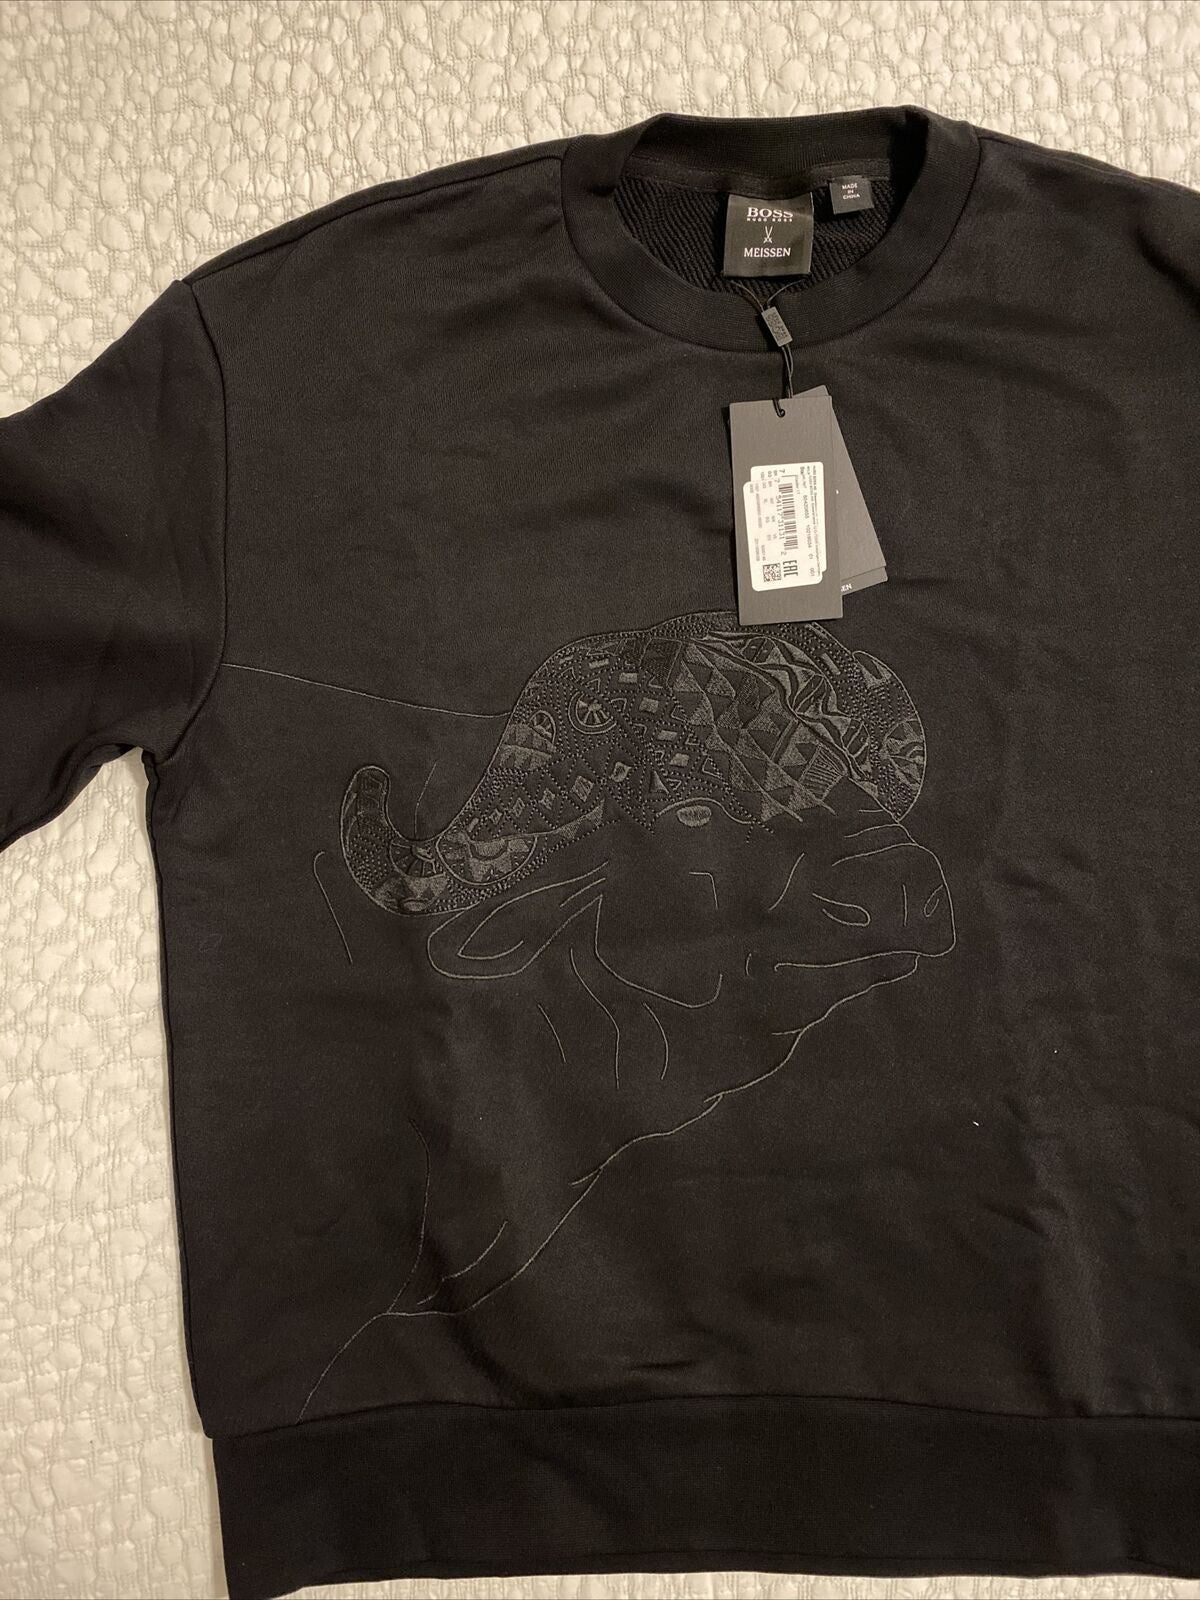 NWT $228 BOSS Hugo Boss Stadler Graphic Cotton Sweatshirt L